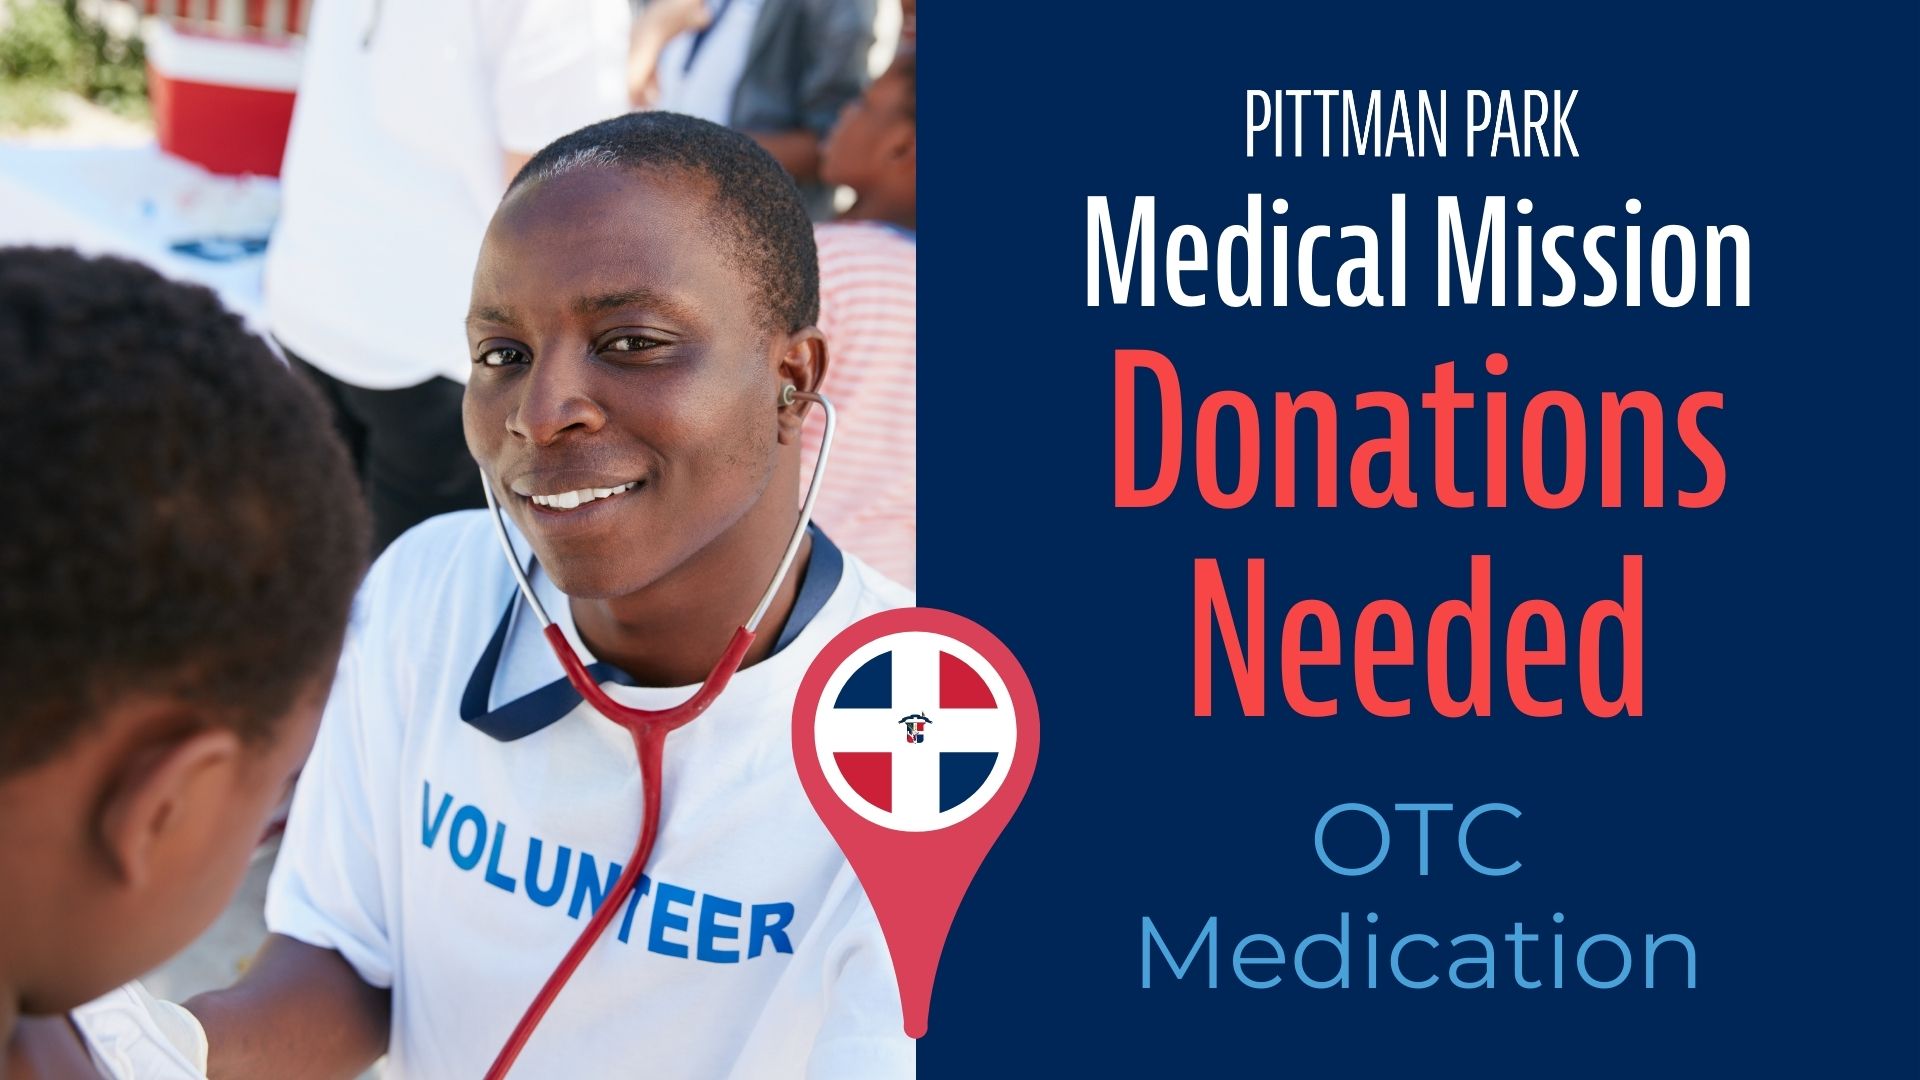 OTC Medication Needed for Medical Mission